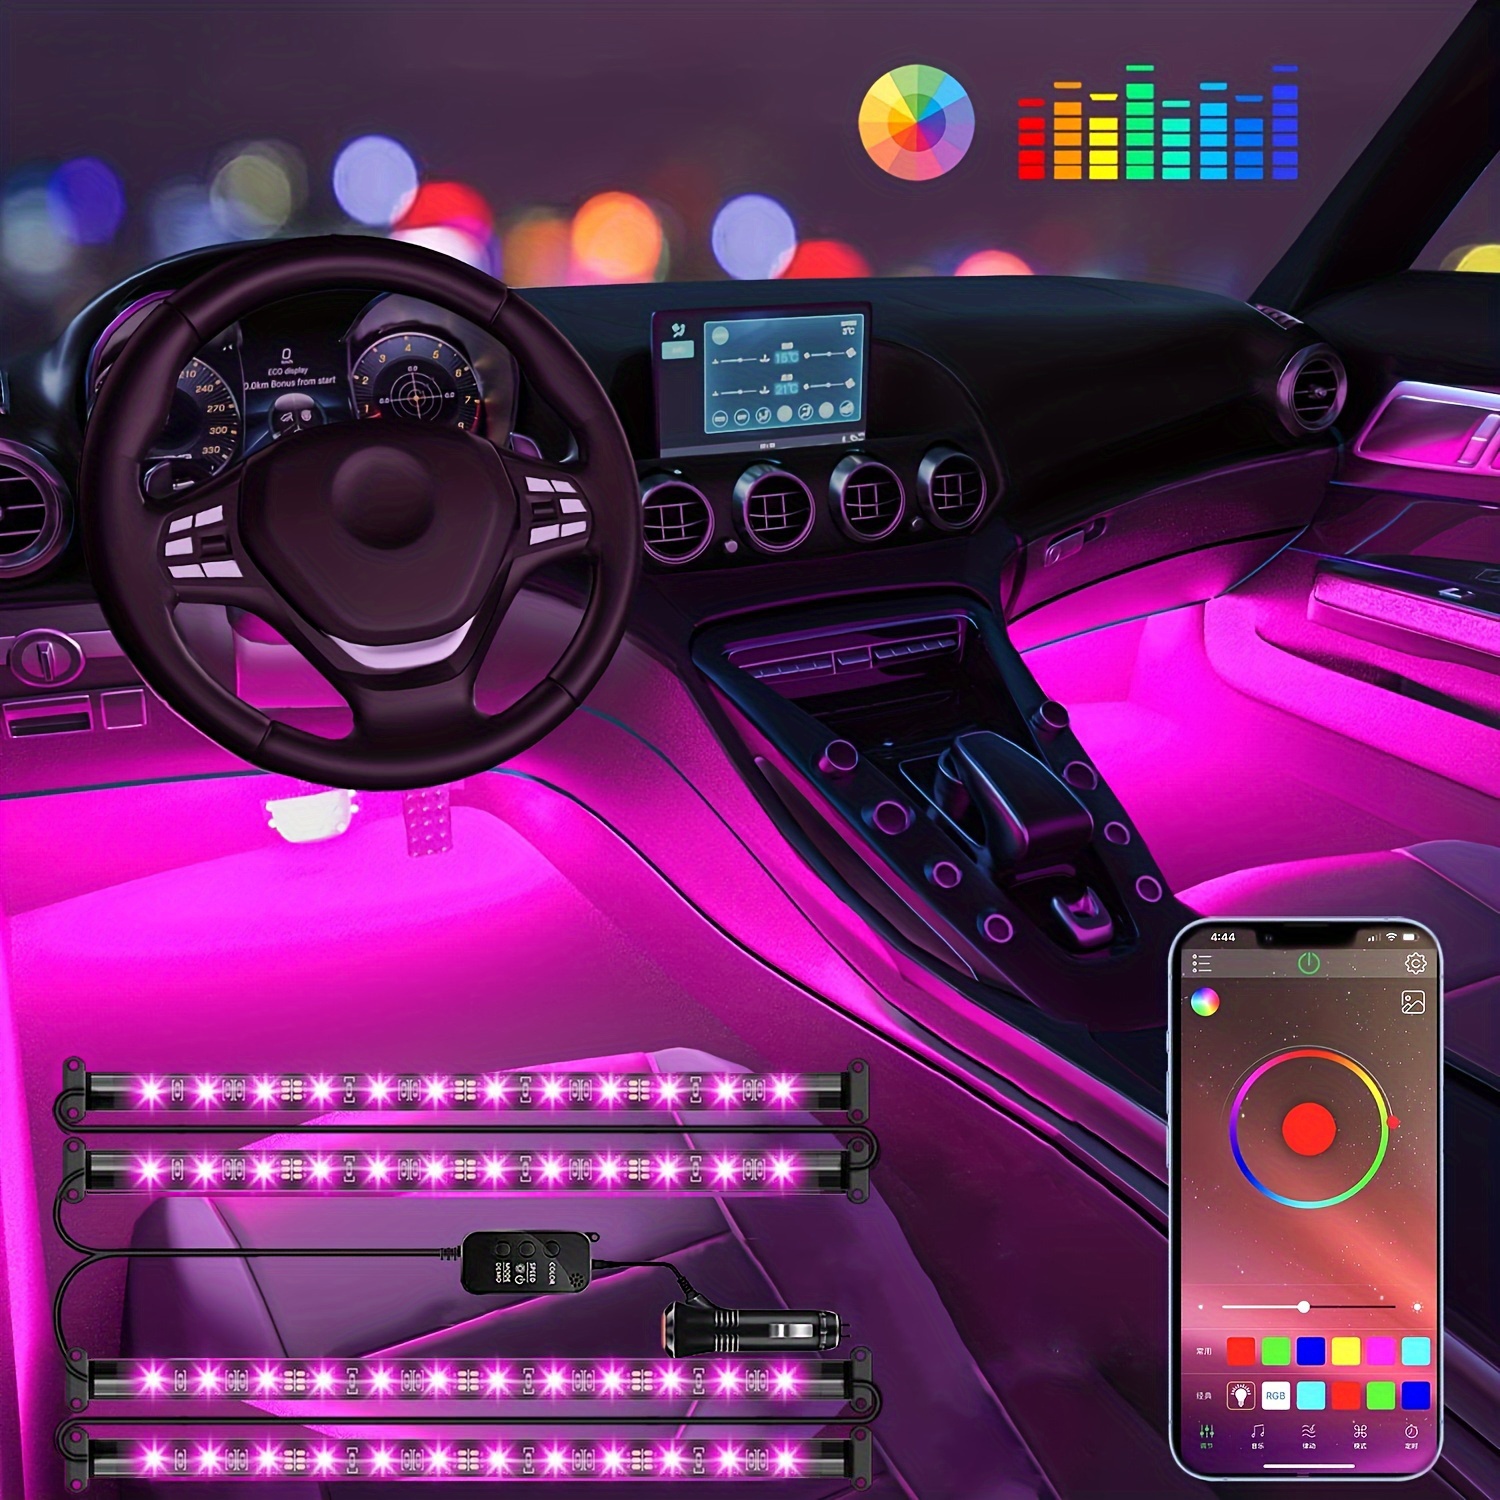 New Car Accessories RGB LED Light Dash Floor Foot Strip Lights Decorative  Lamp